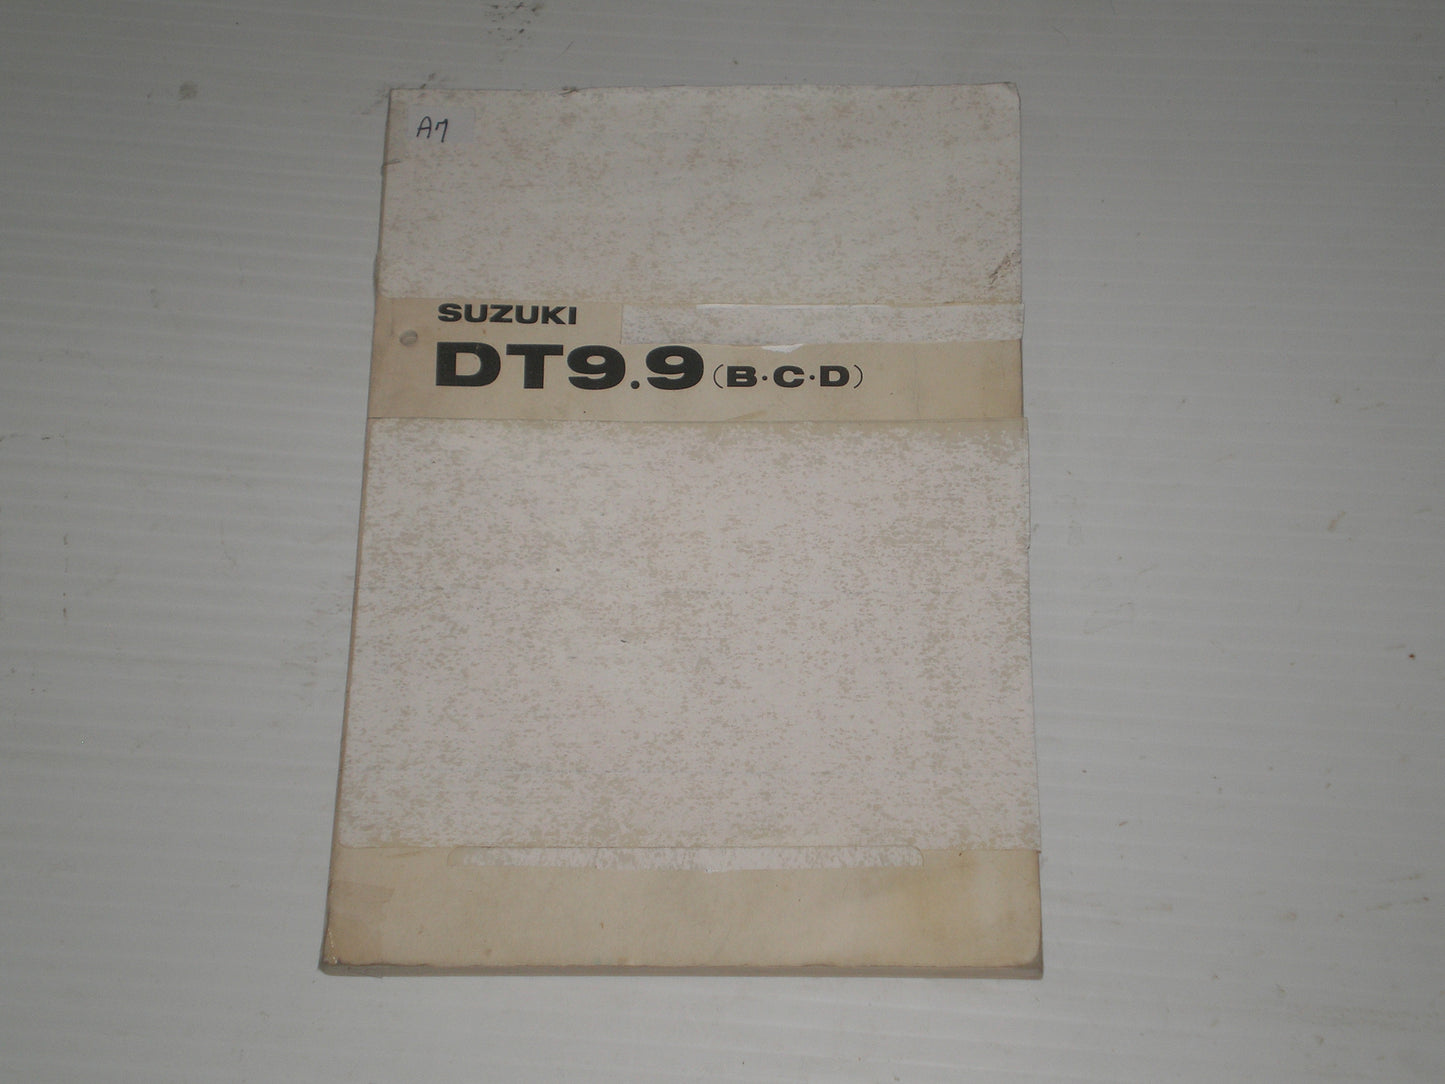 SUZUKI DT9.9  B/C/D  1978  Outbord Motor  Parts Catalogue  99000-92302  #A7